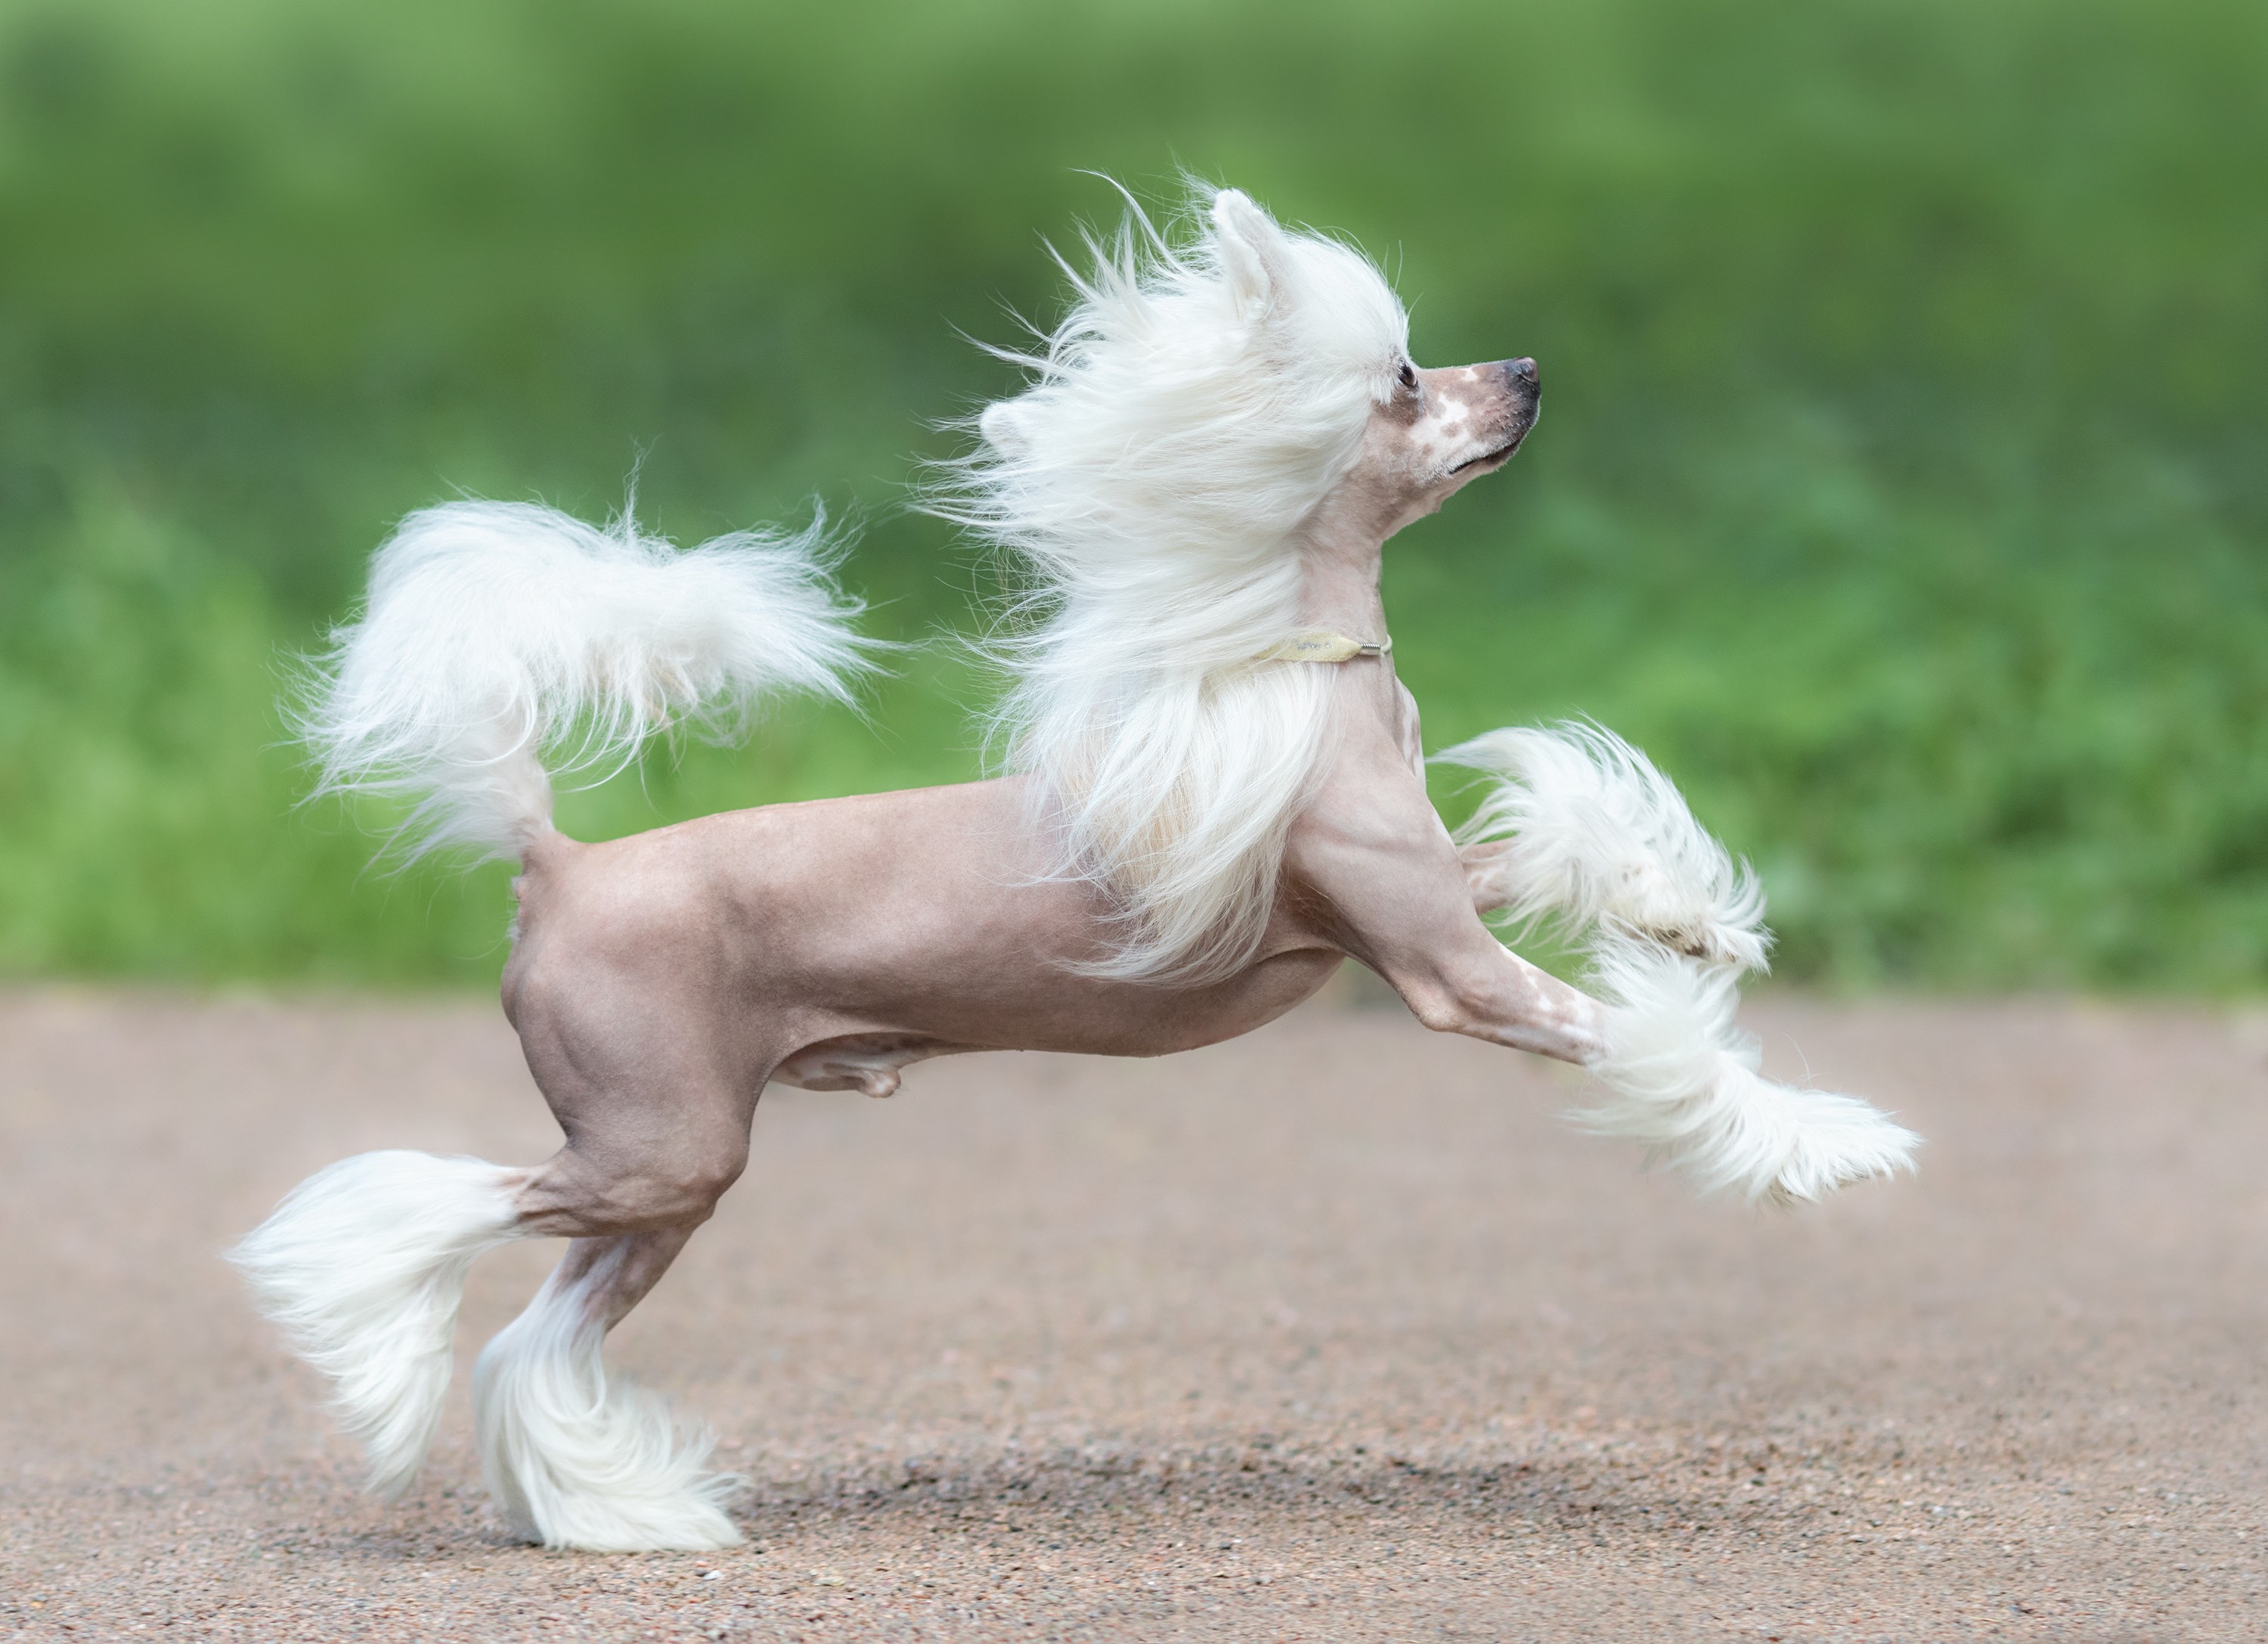 hairless chinese crested dog running on sidewalk